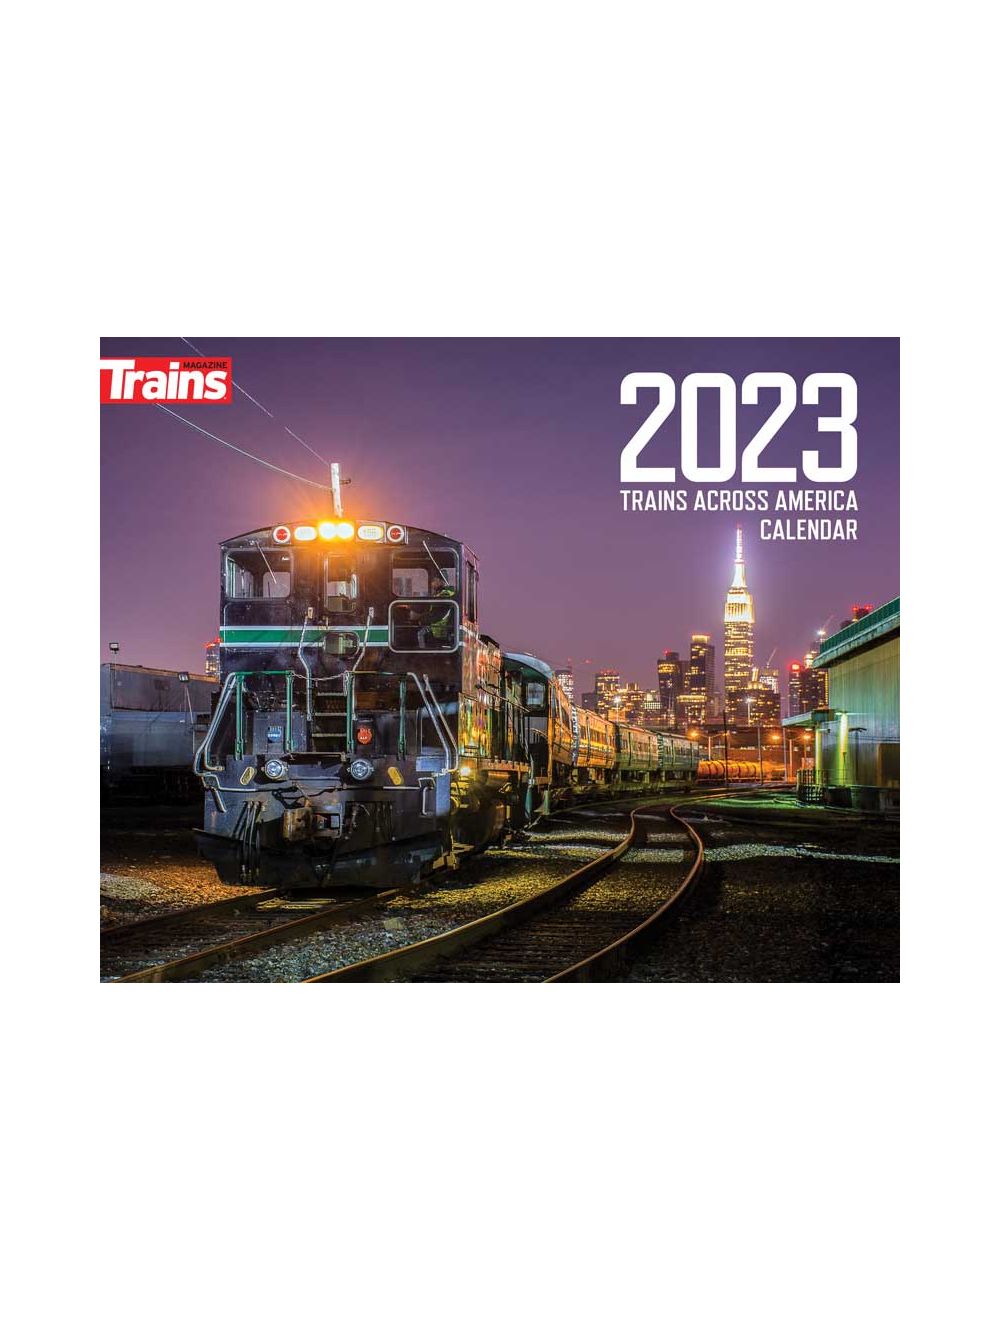 Trains Across America 2023 calendar